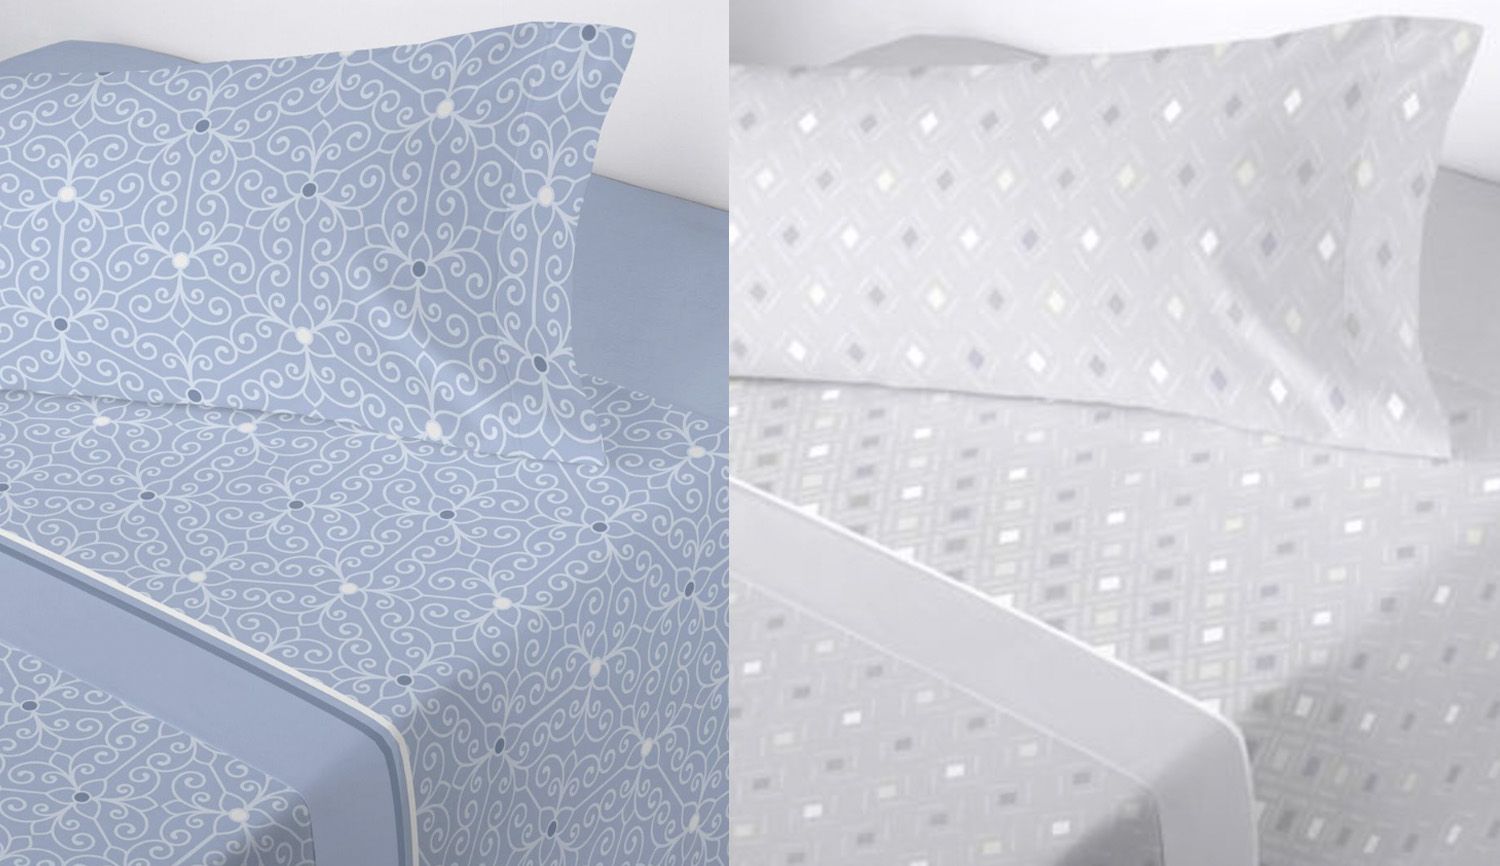 Sábanas coralina cama 150 cms - Marcas Españolas Textil hogar